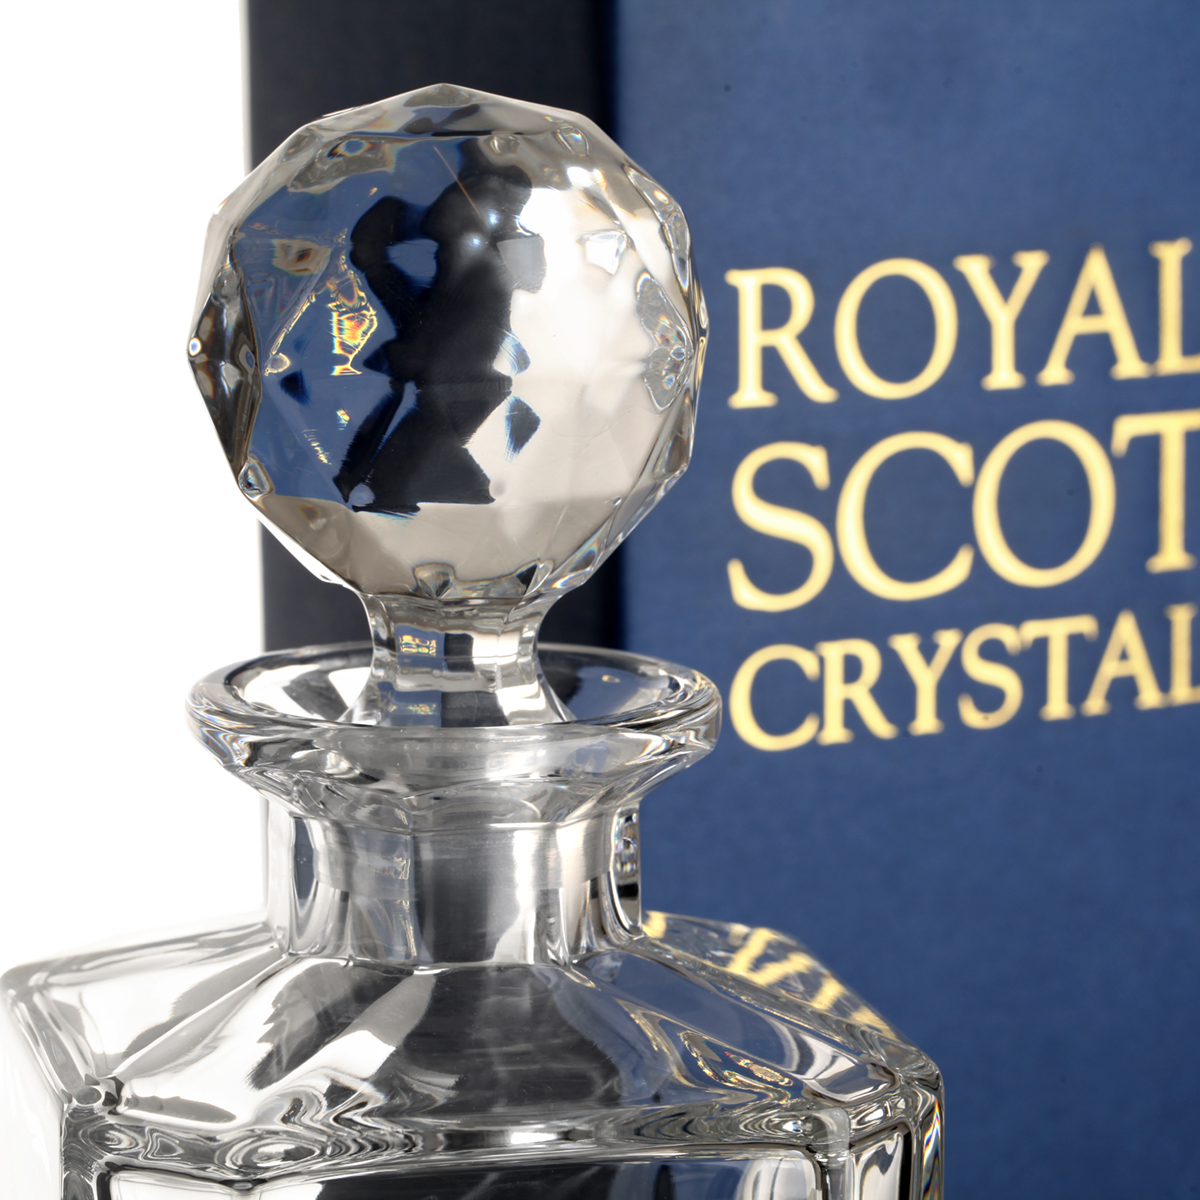 Classic Square Decanter - Kristallglas Whisky Karaffe aus Schottland